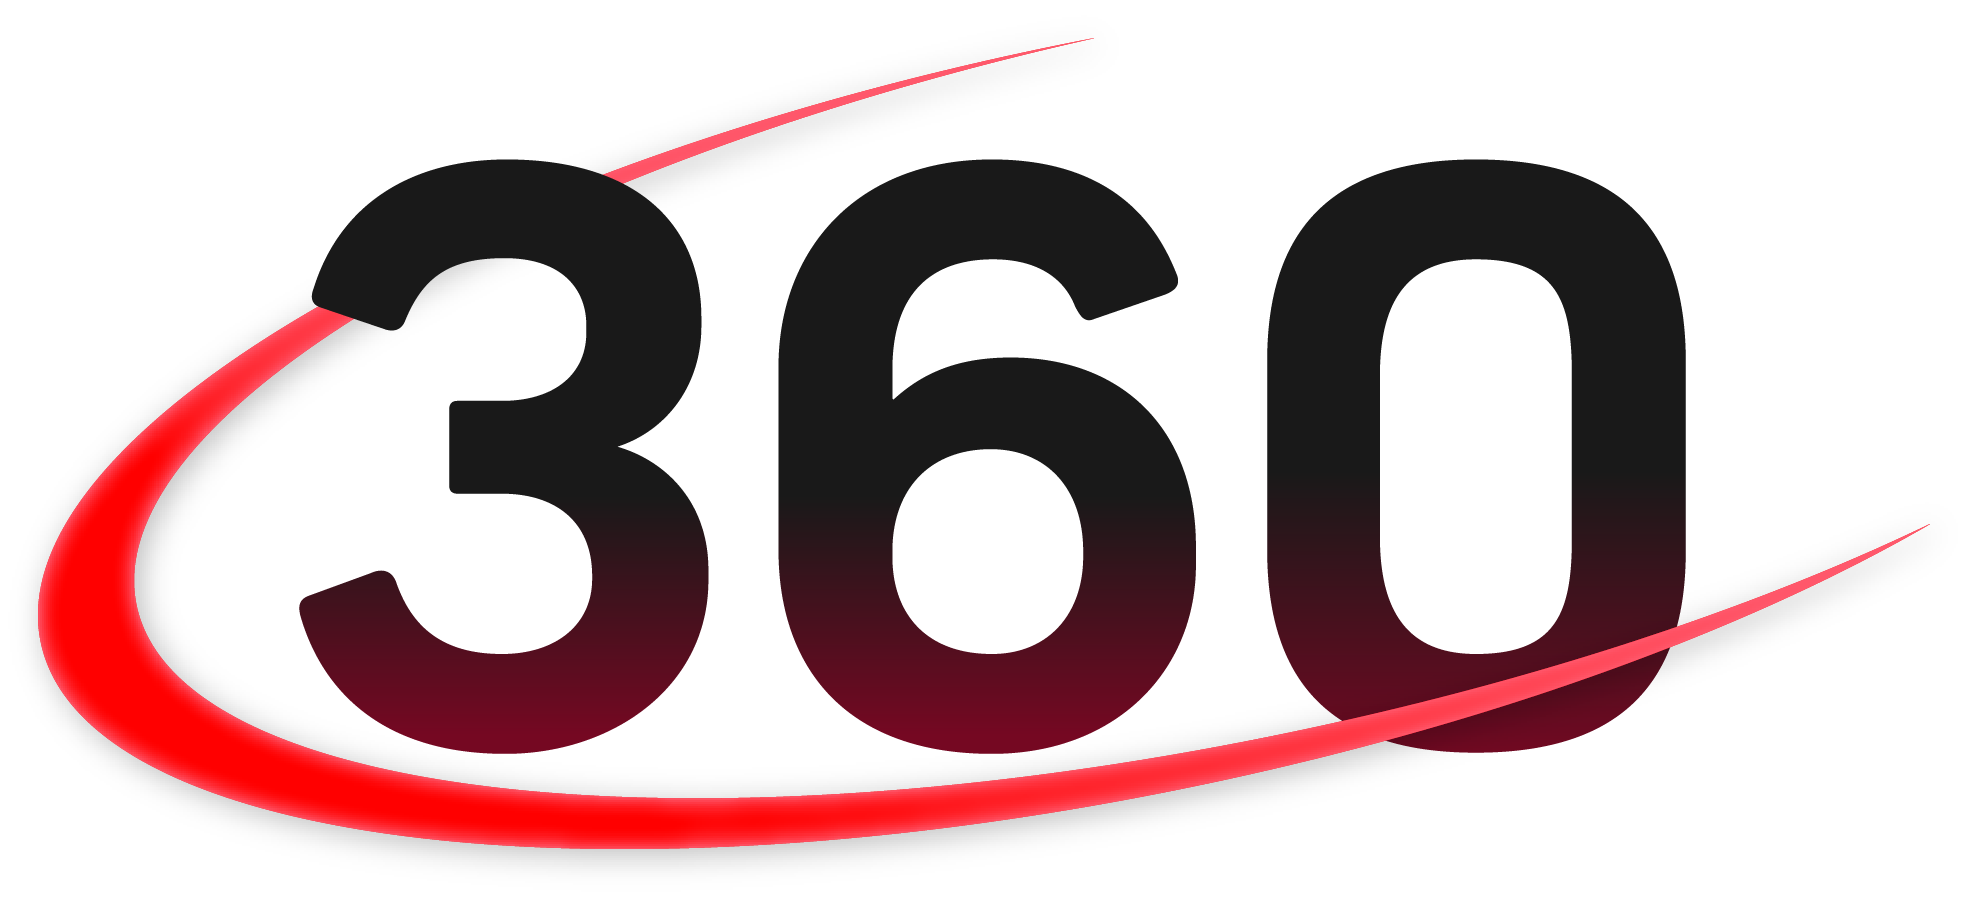 Телеканал 360. 360 Логотип. Канал 360 эмблема. 360 Новости логотип. Канал пд